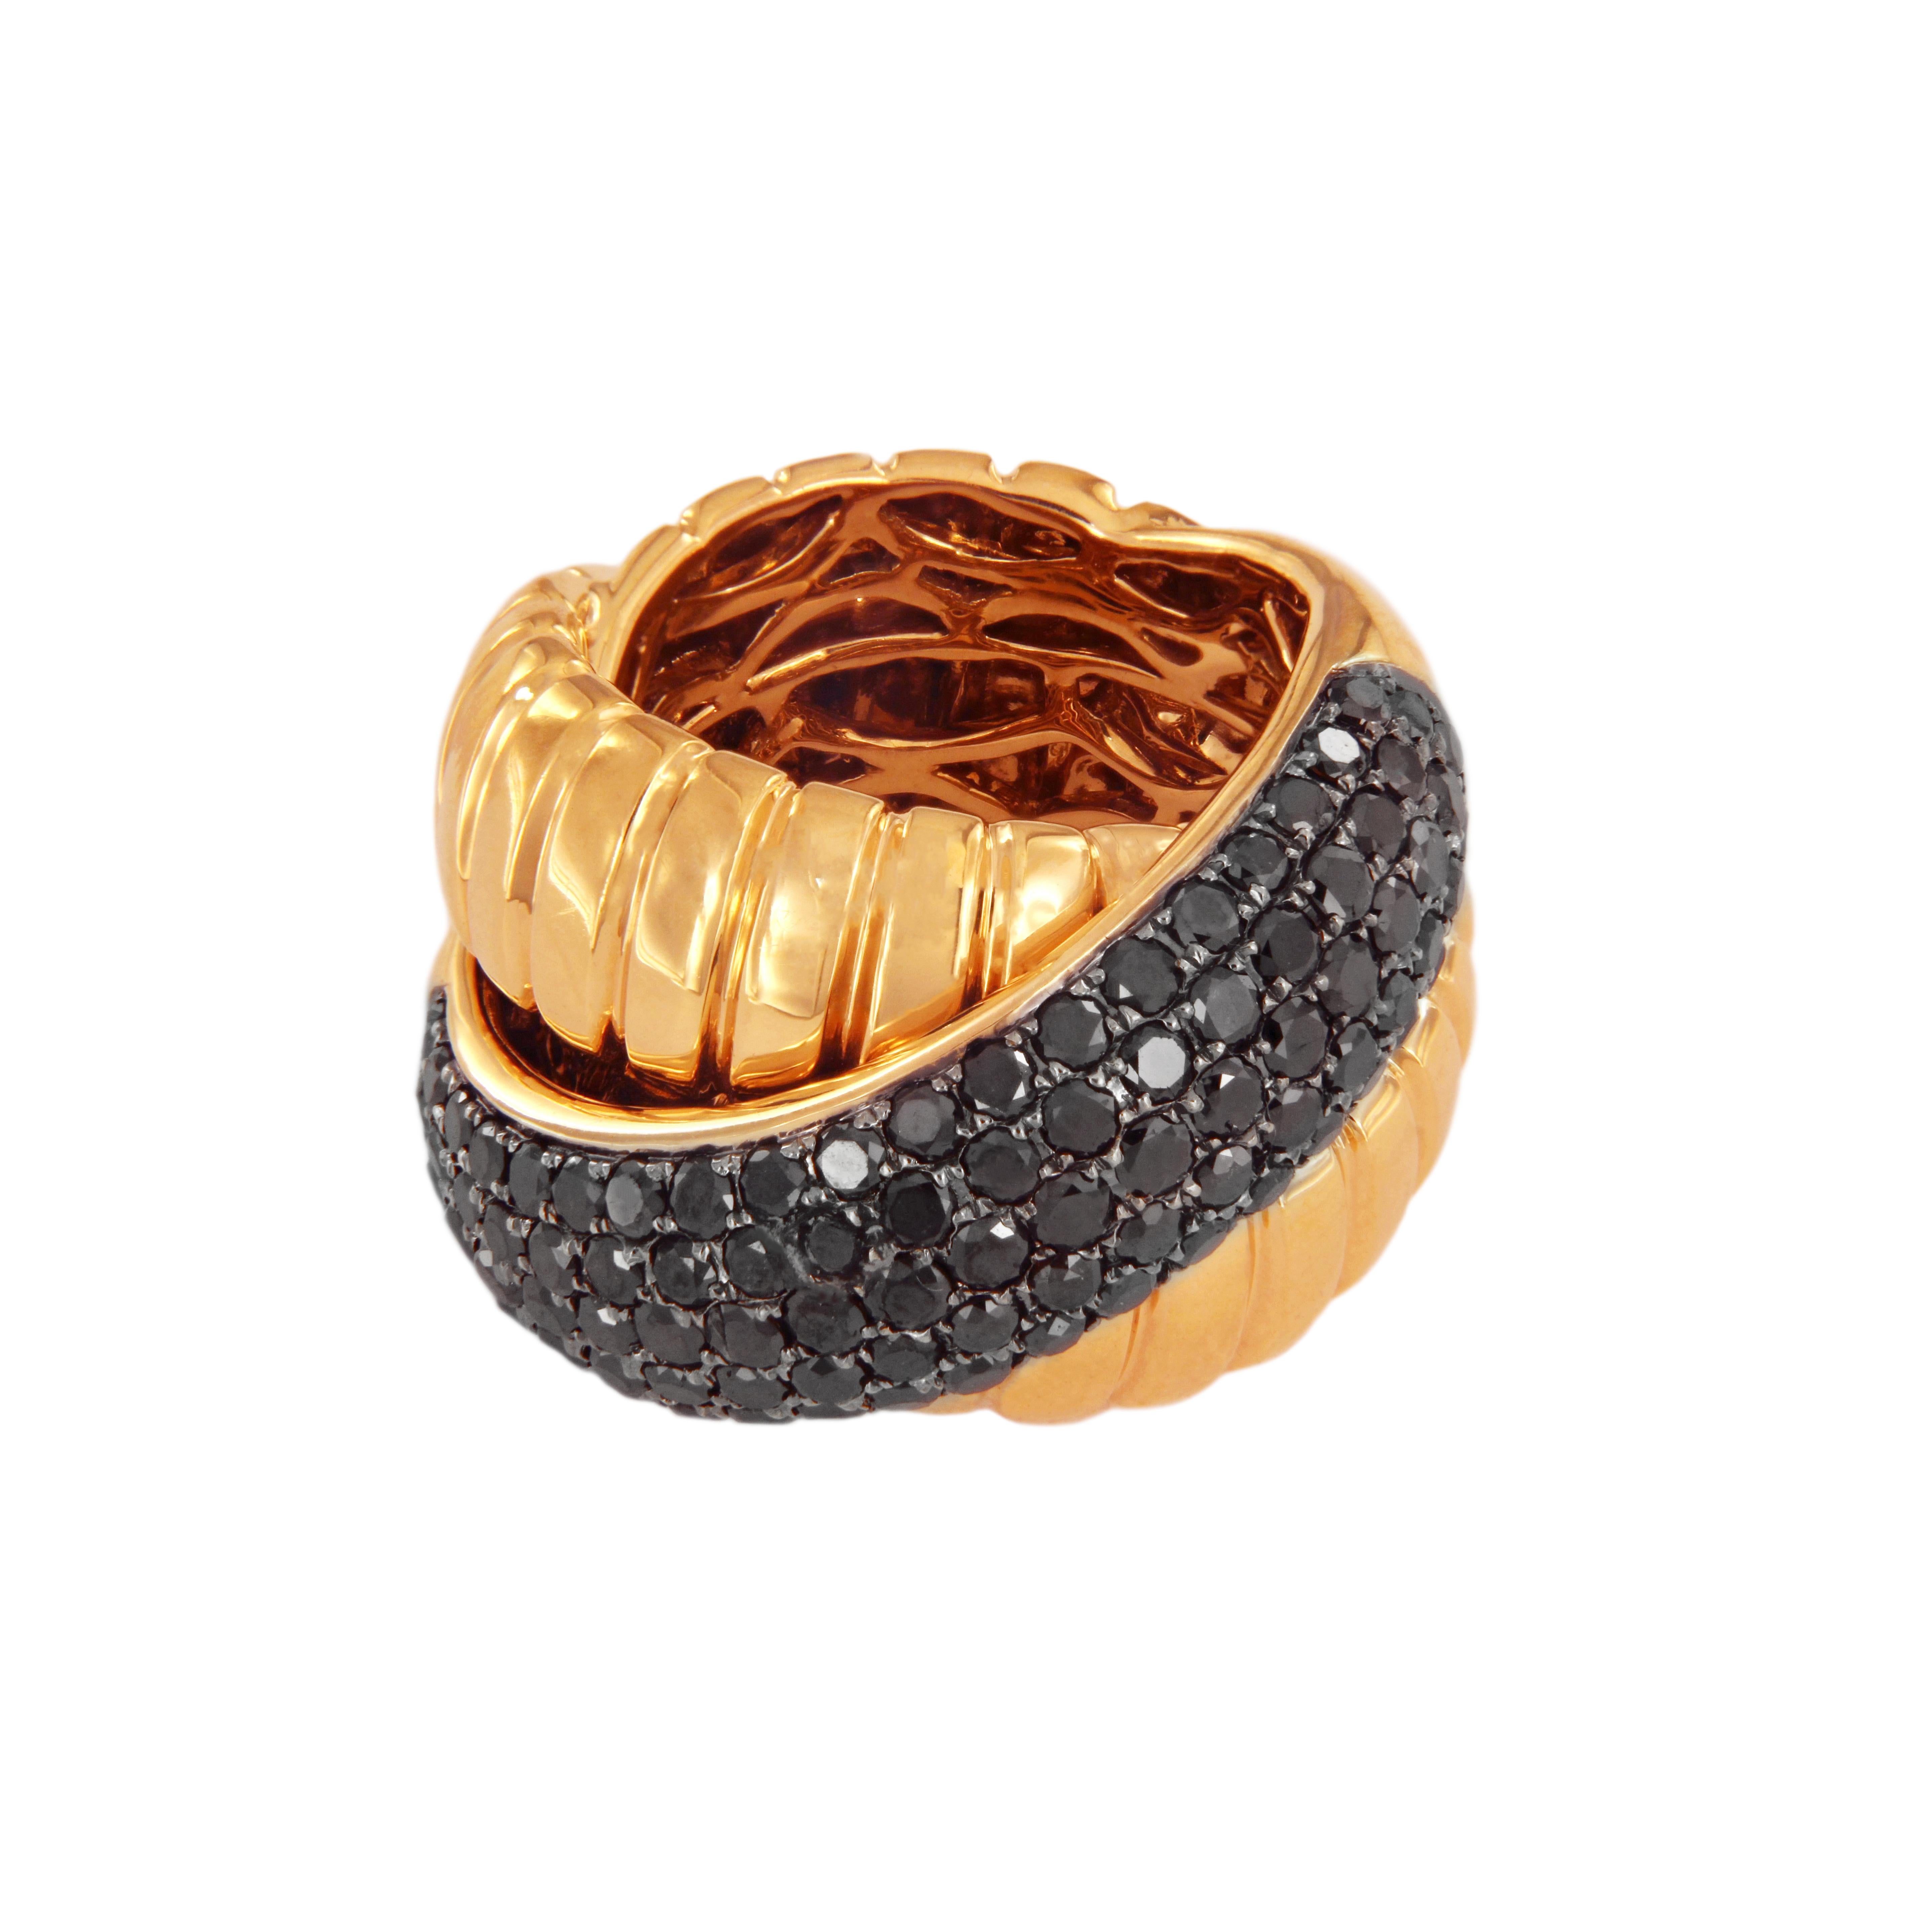 -18k Rose Gold

-Ring size: 6.5

-Width: 12-19mm

-Weight: 24gr

-Diamond: 3.43ct

Original Retail: $5900